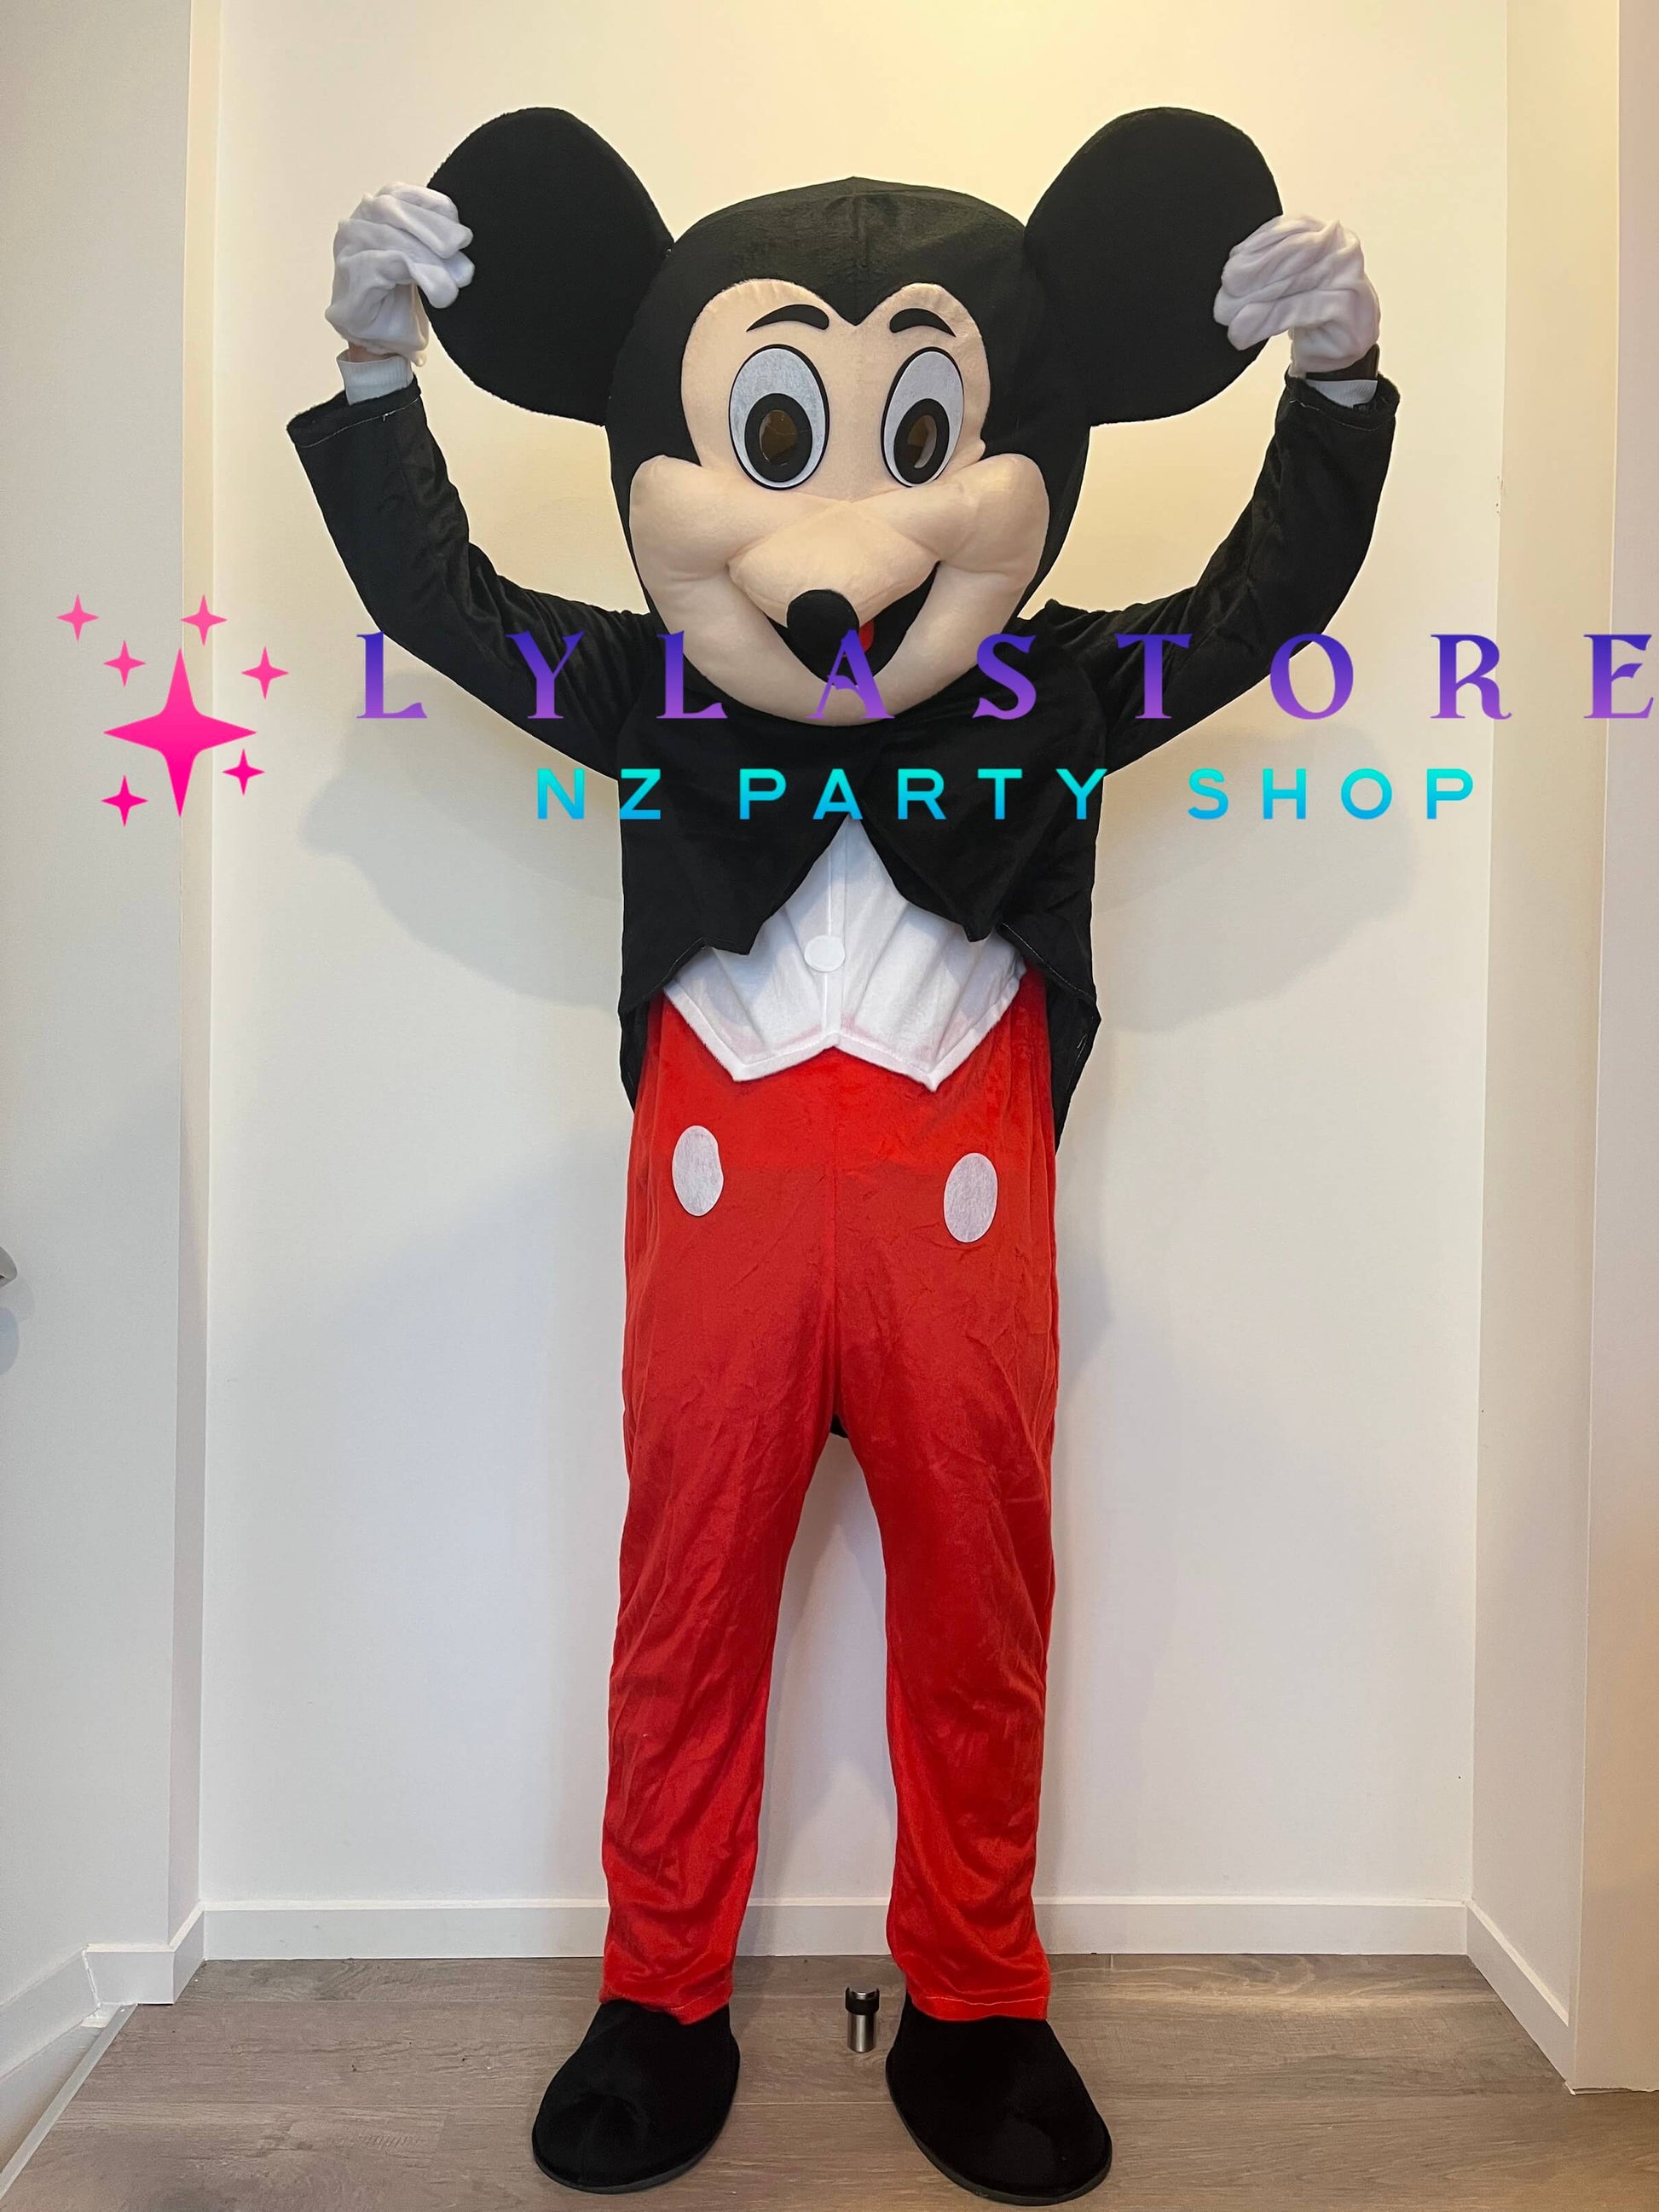 disney-mickey-mouse-costume-hire-auckland-lylastore.com